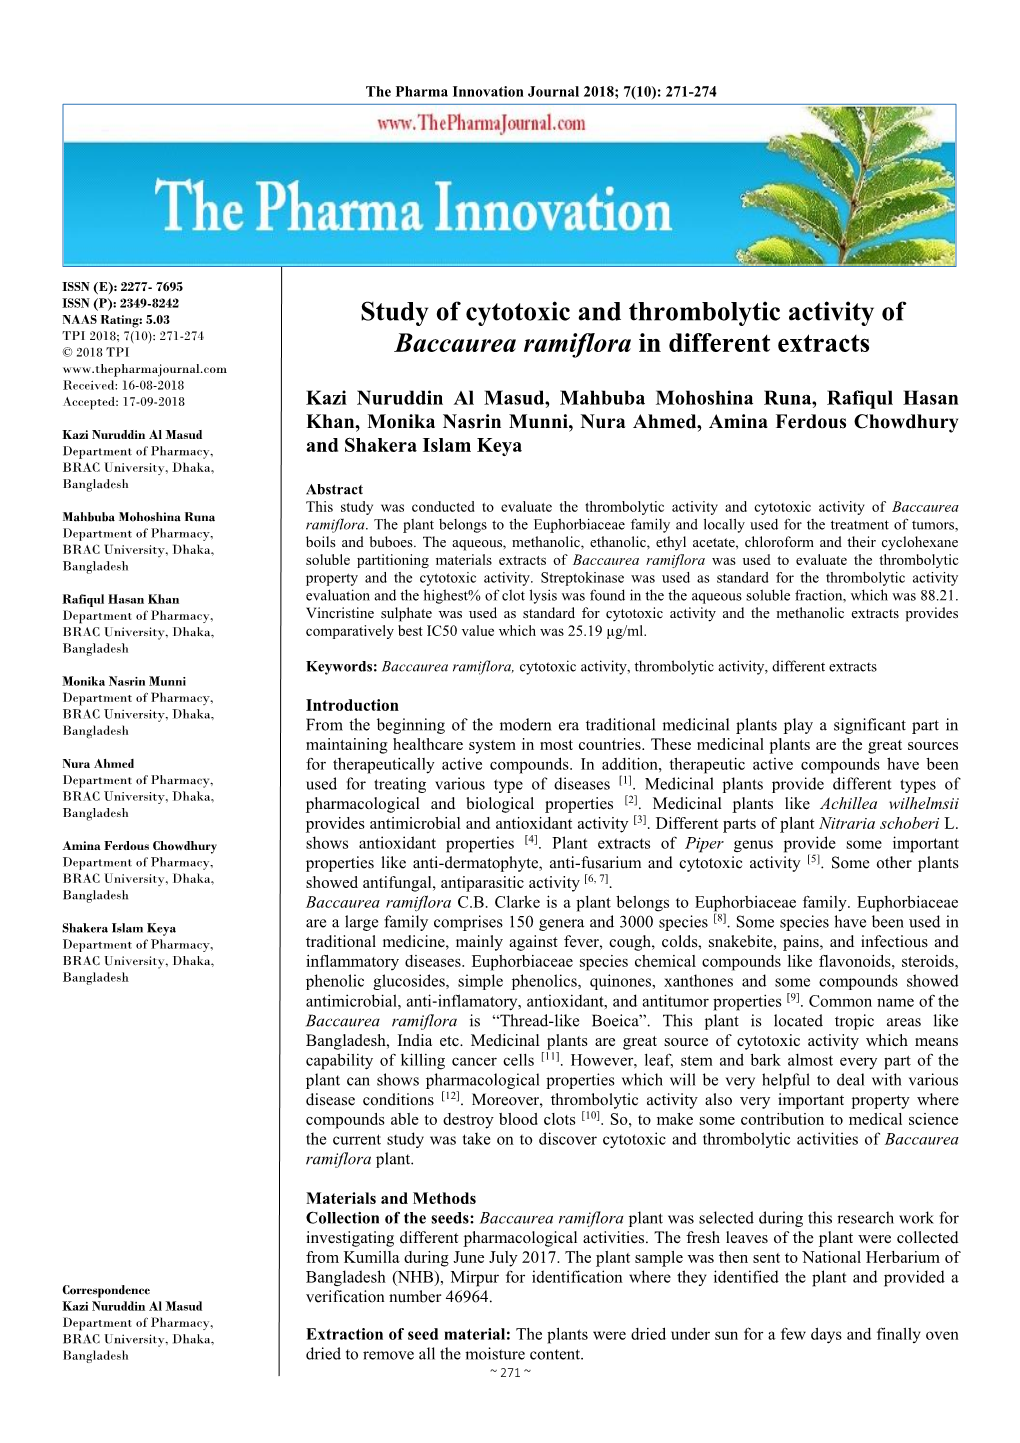 Study of Cytotoxic and Thrombolytic Activity of Baccaurea Ramiflora In